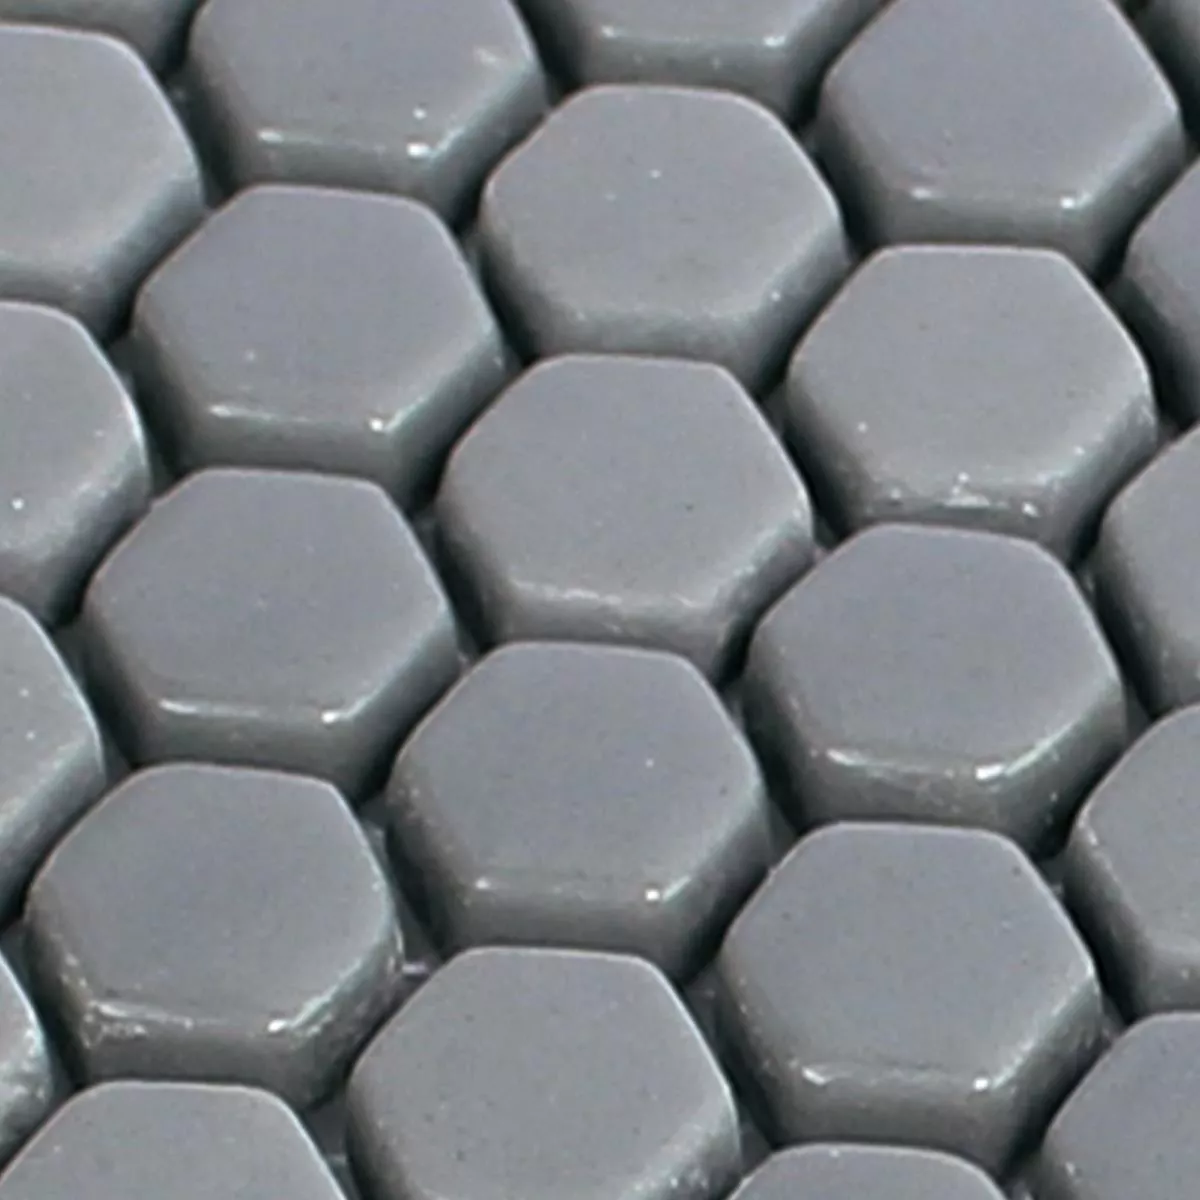 Muster von Glasmosaik Fliesen Brockway Hexagon Eco Grau